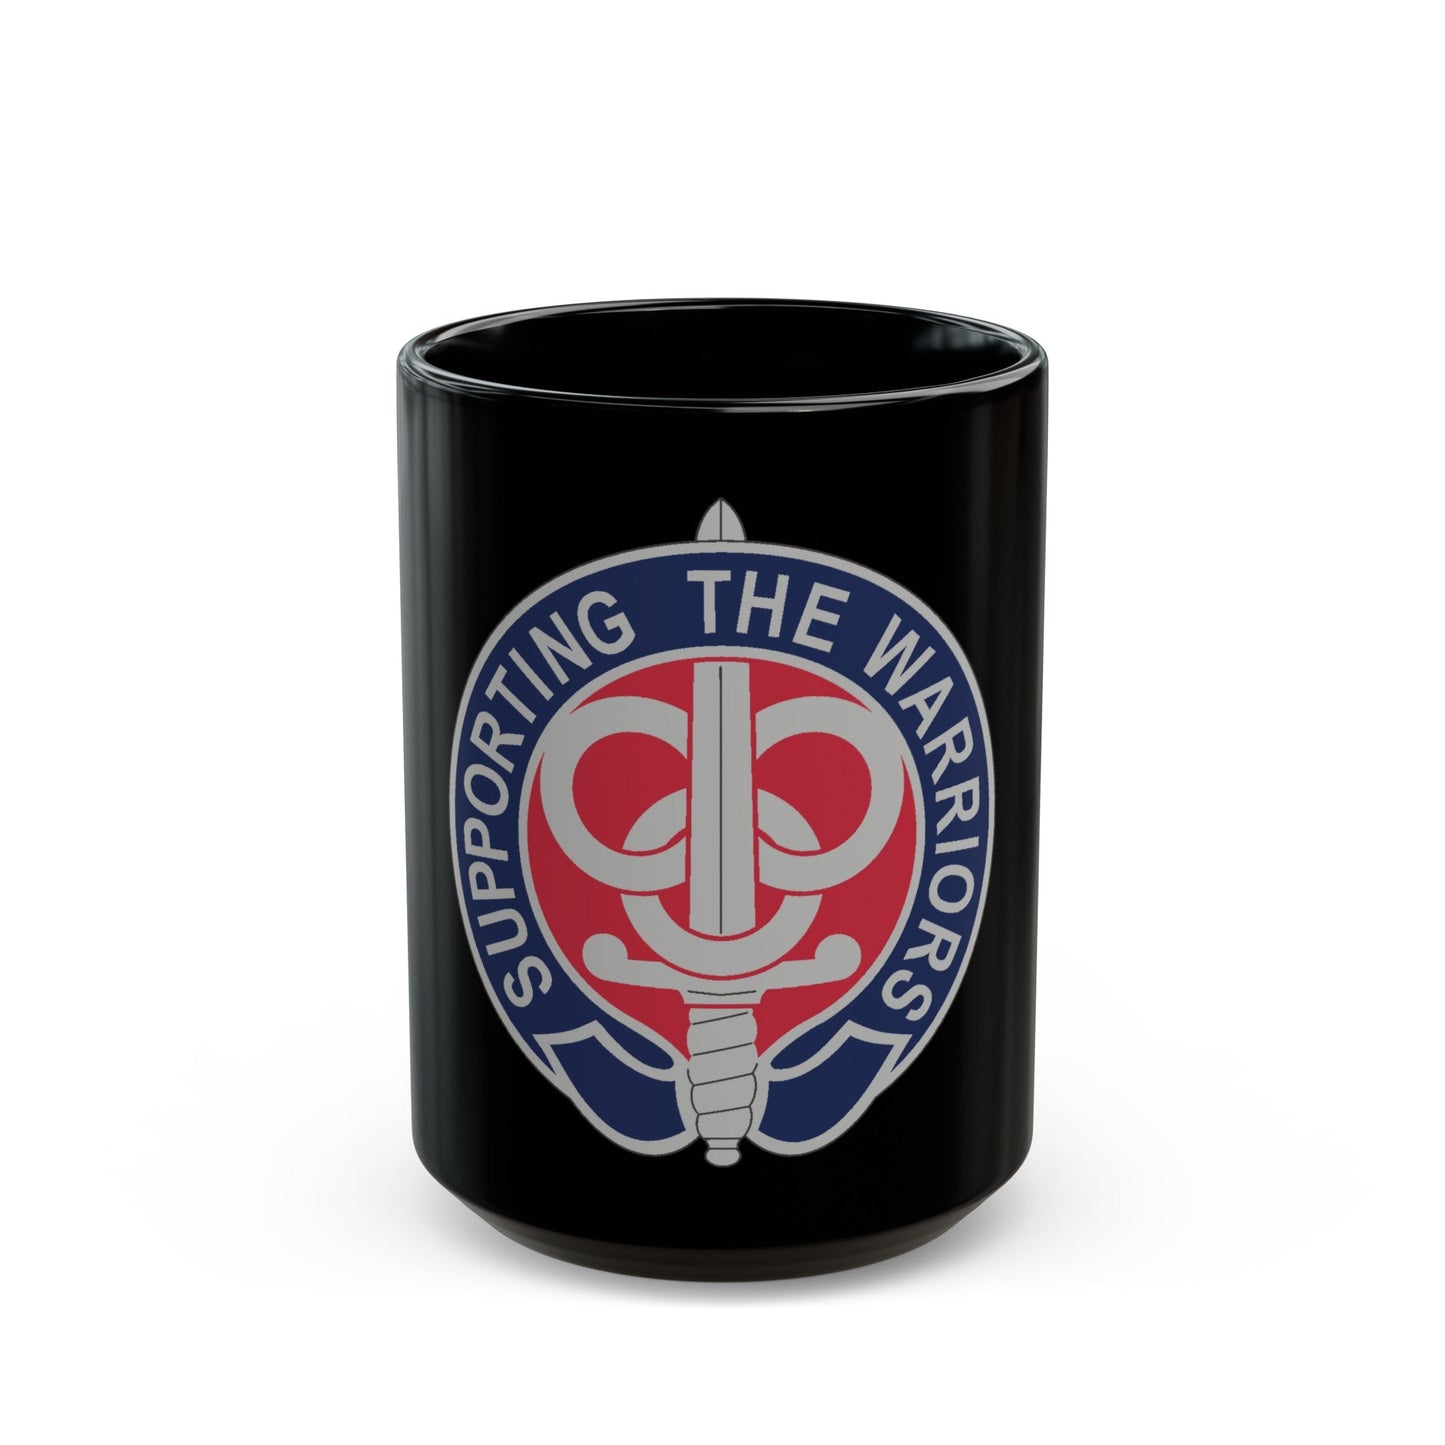 3 Personnel Command 2 (U.S. Army) Black Coffee Mug